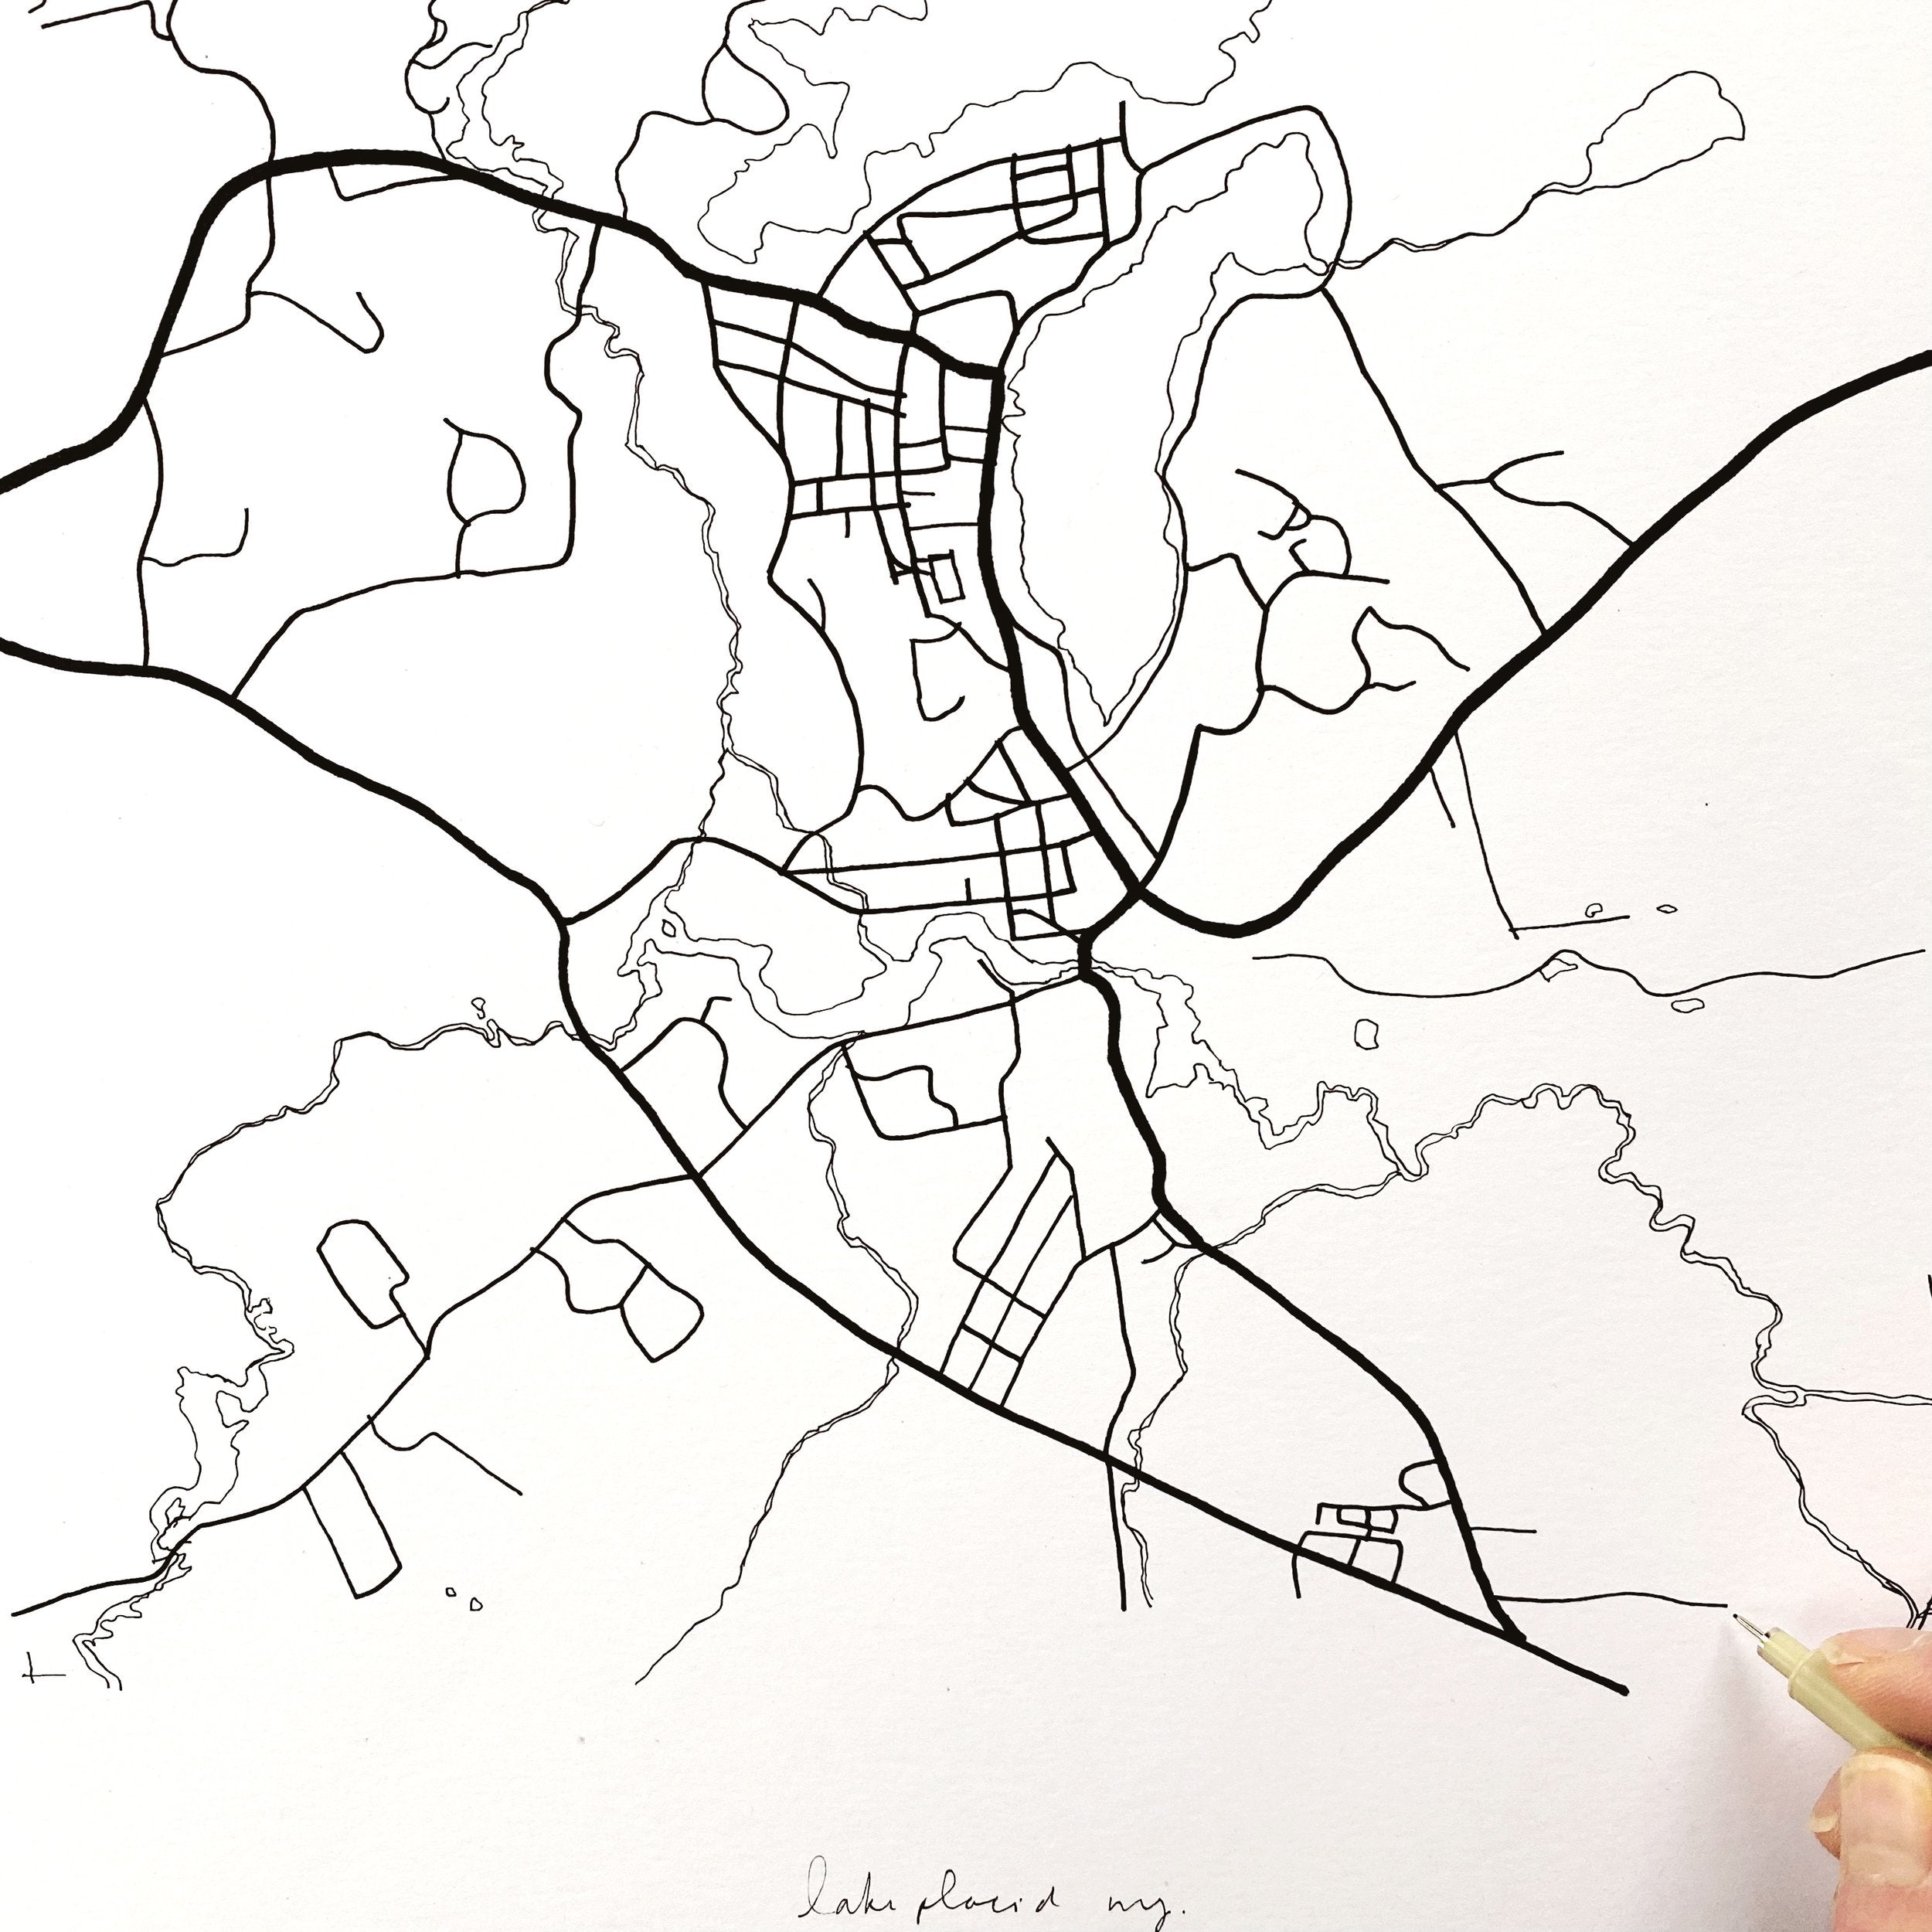 LAKE PLACID New York Topographical Map Drawing: PRINT